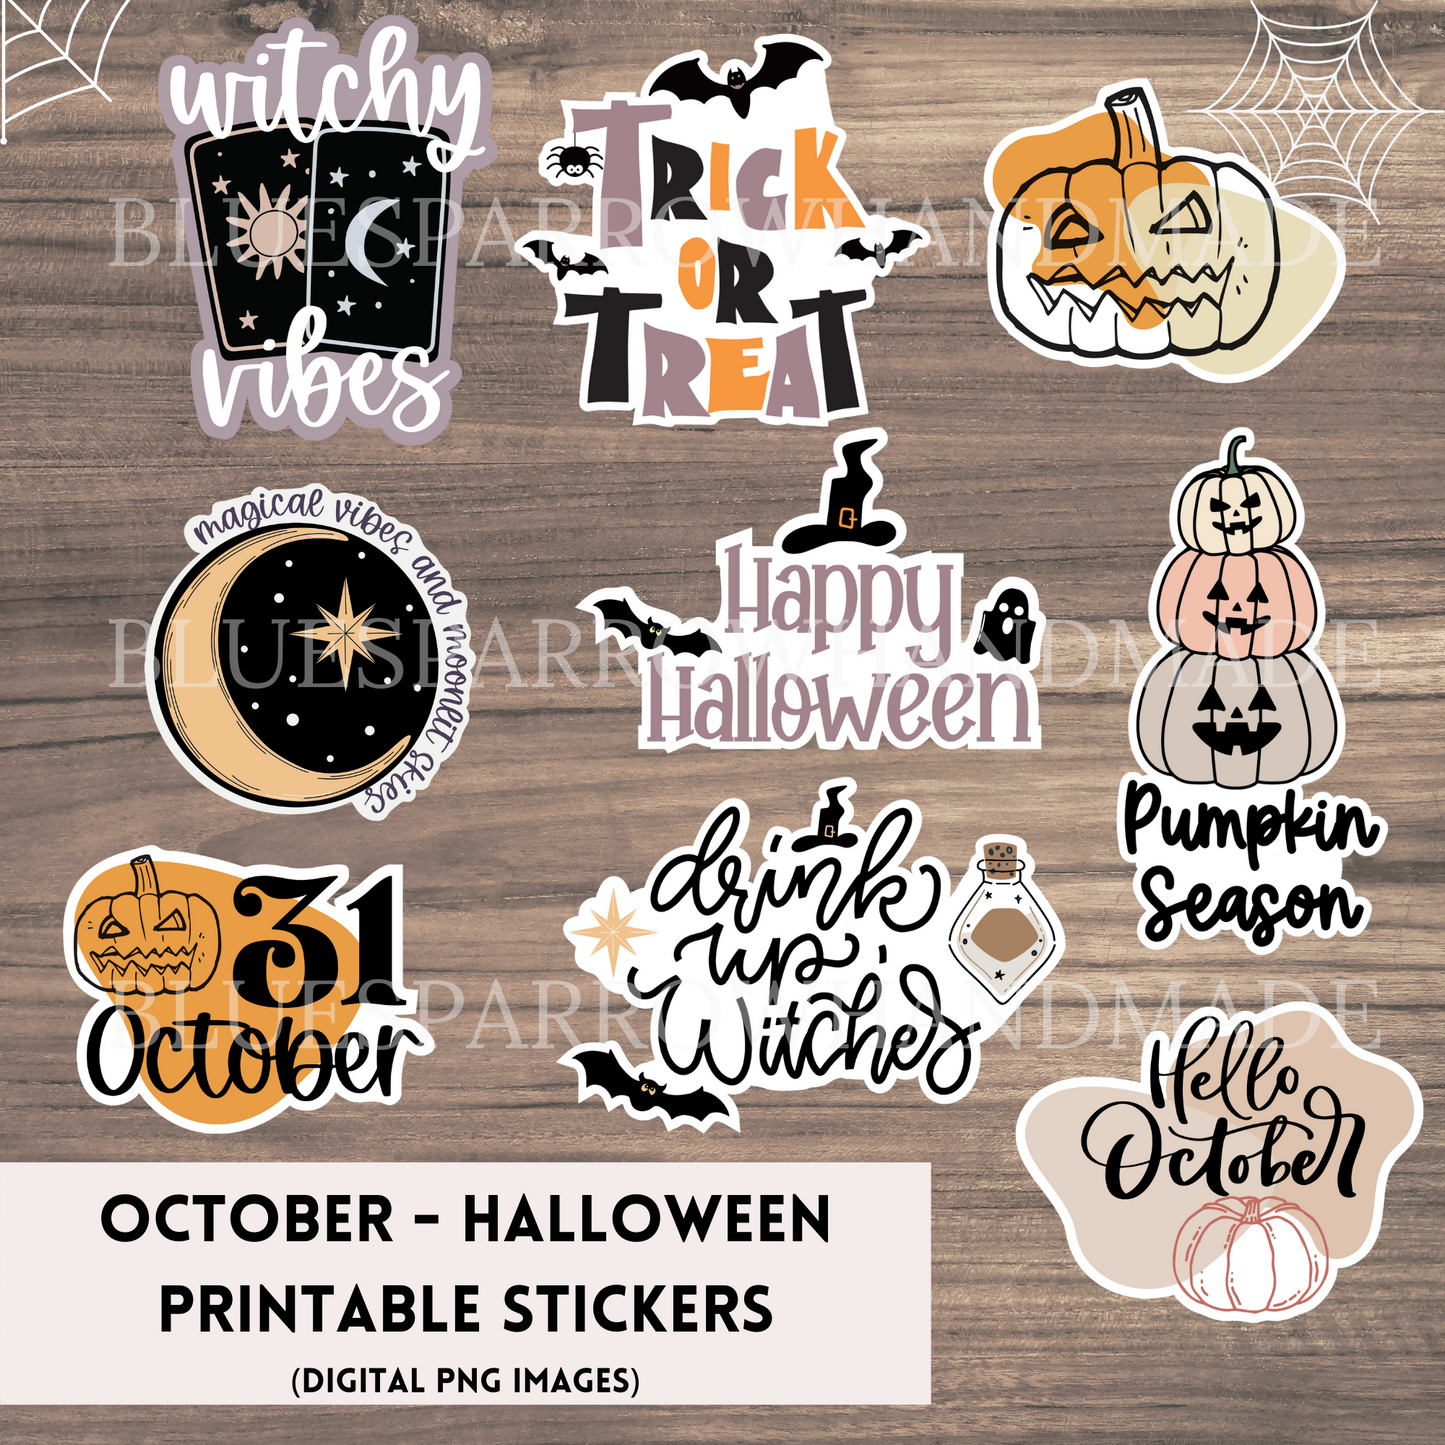 October & Halloween Printable Stickers